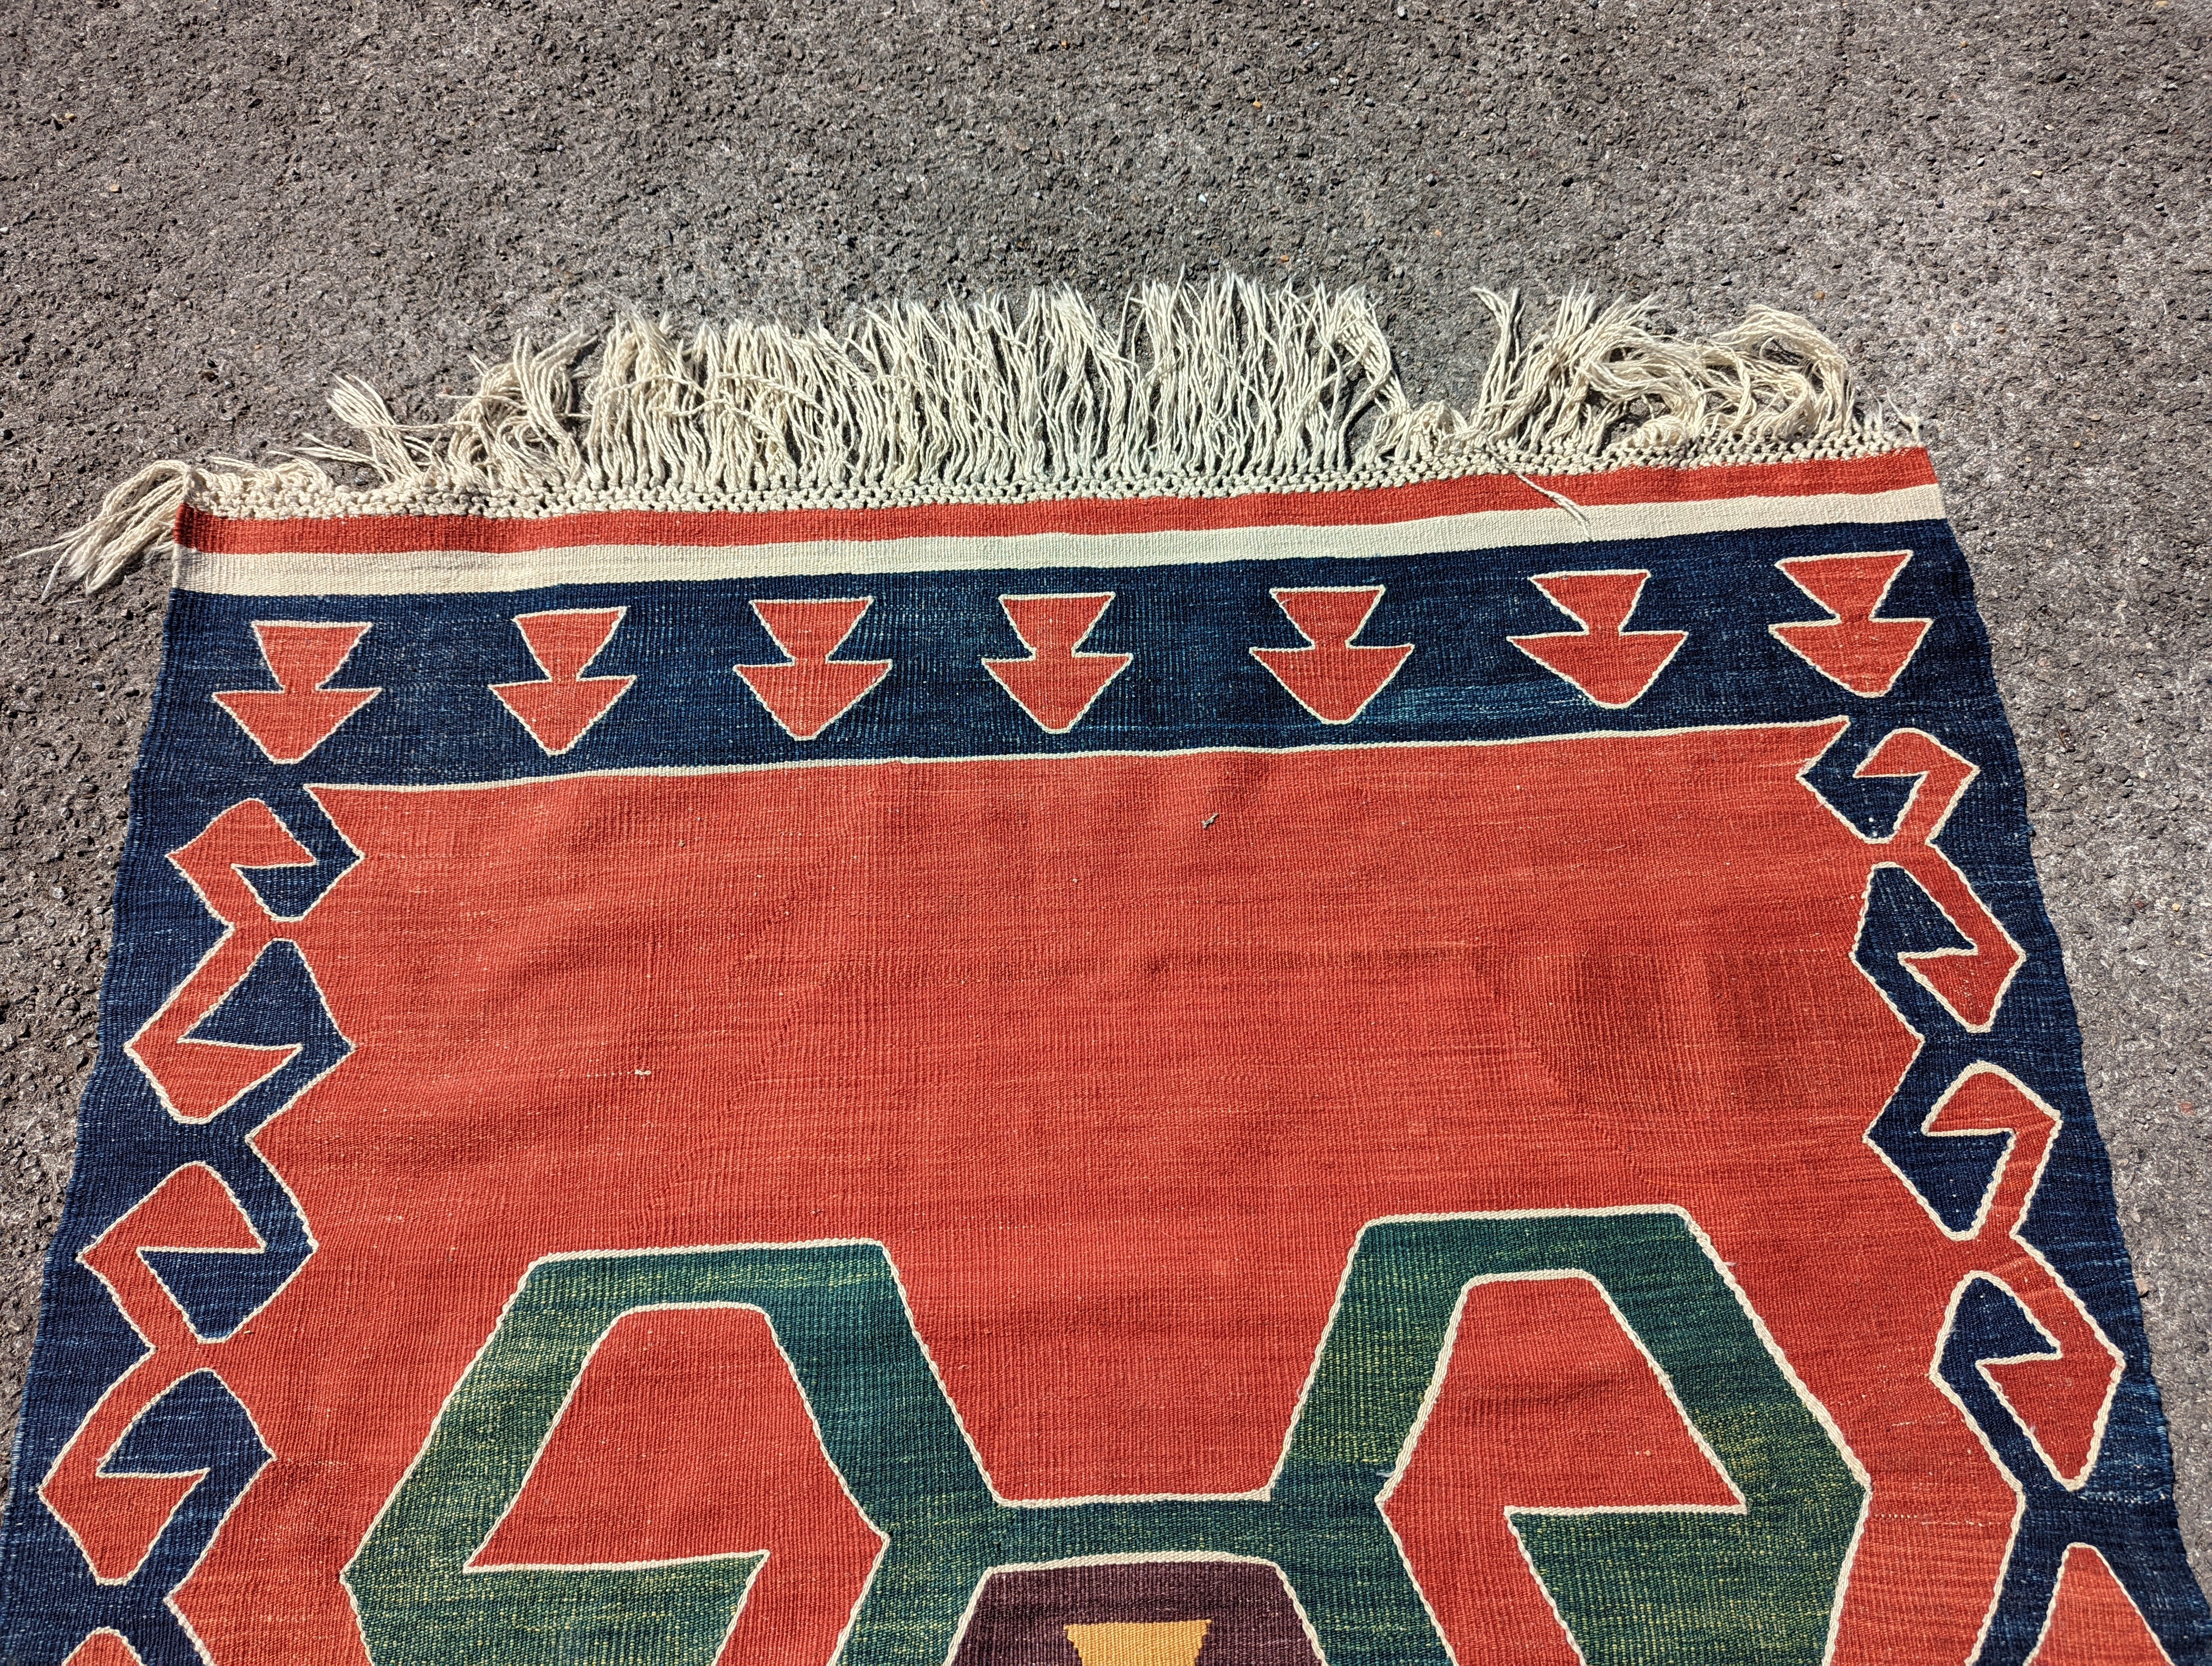 An Anatolian flatweave rug, 170 x 130cm